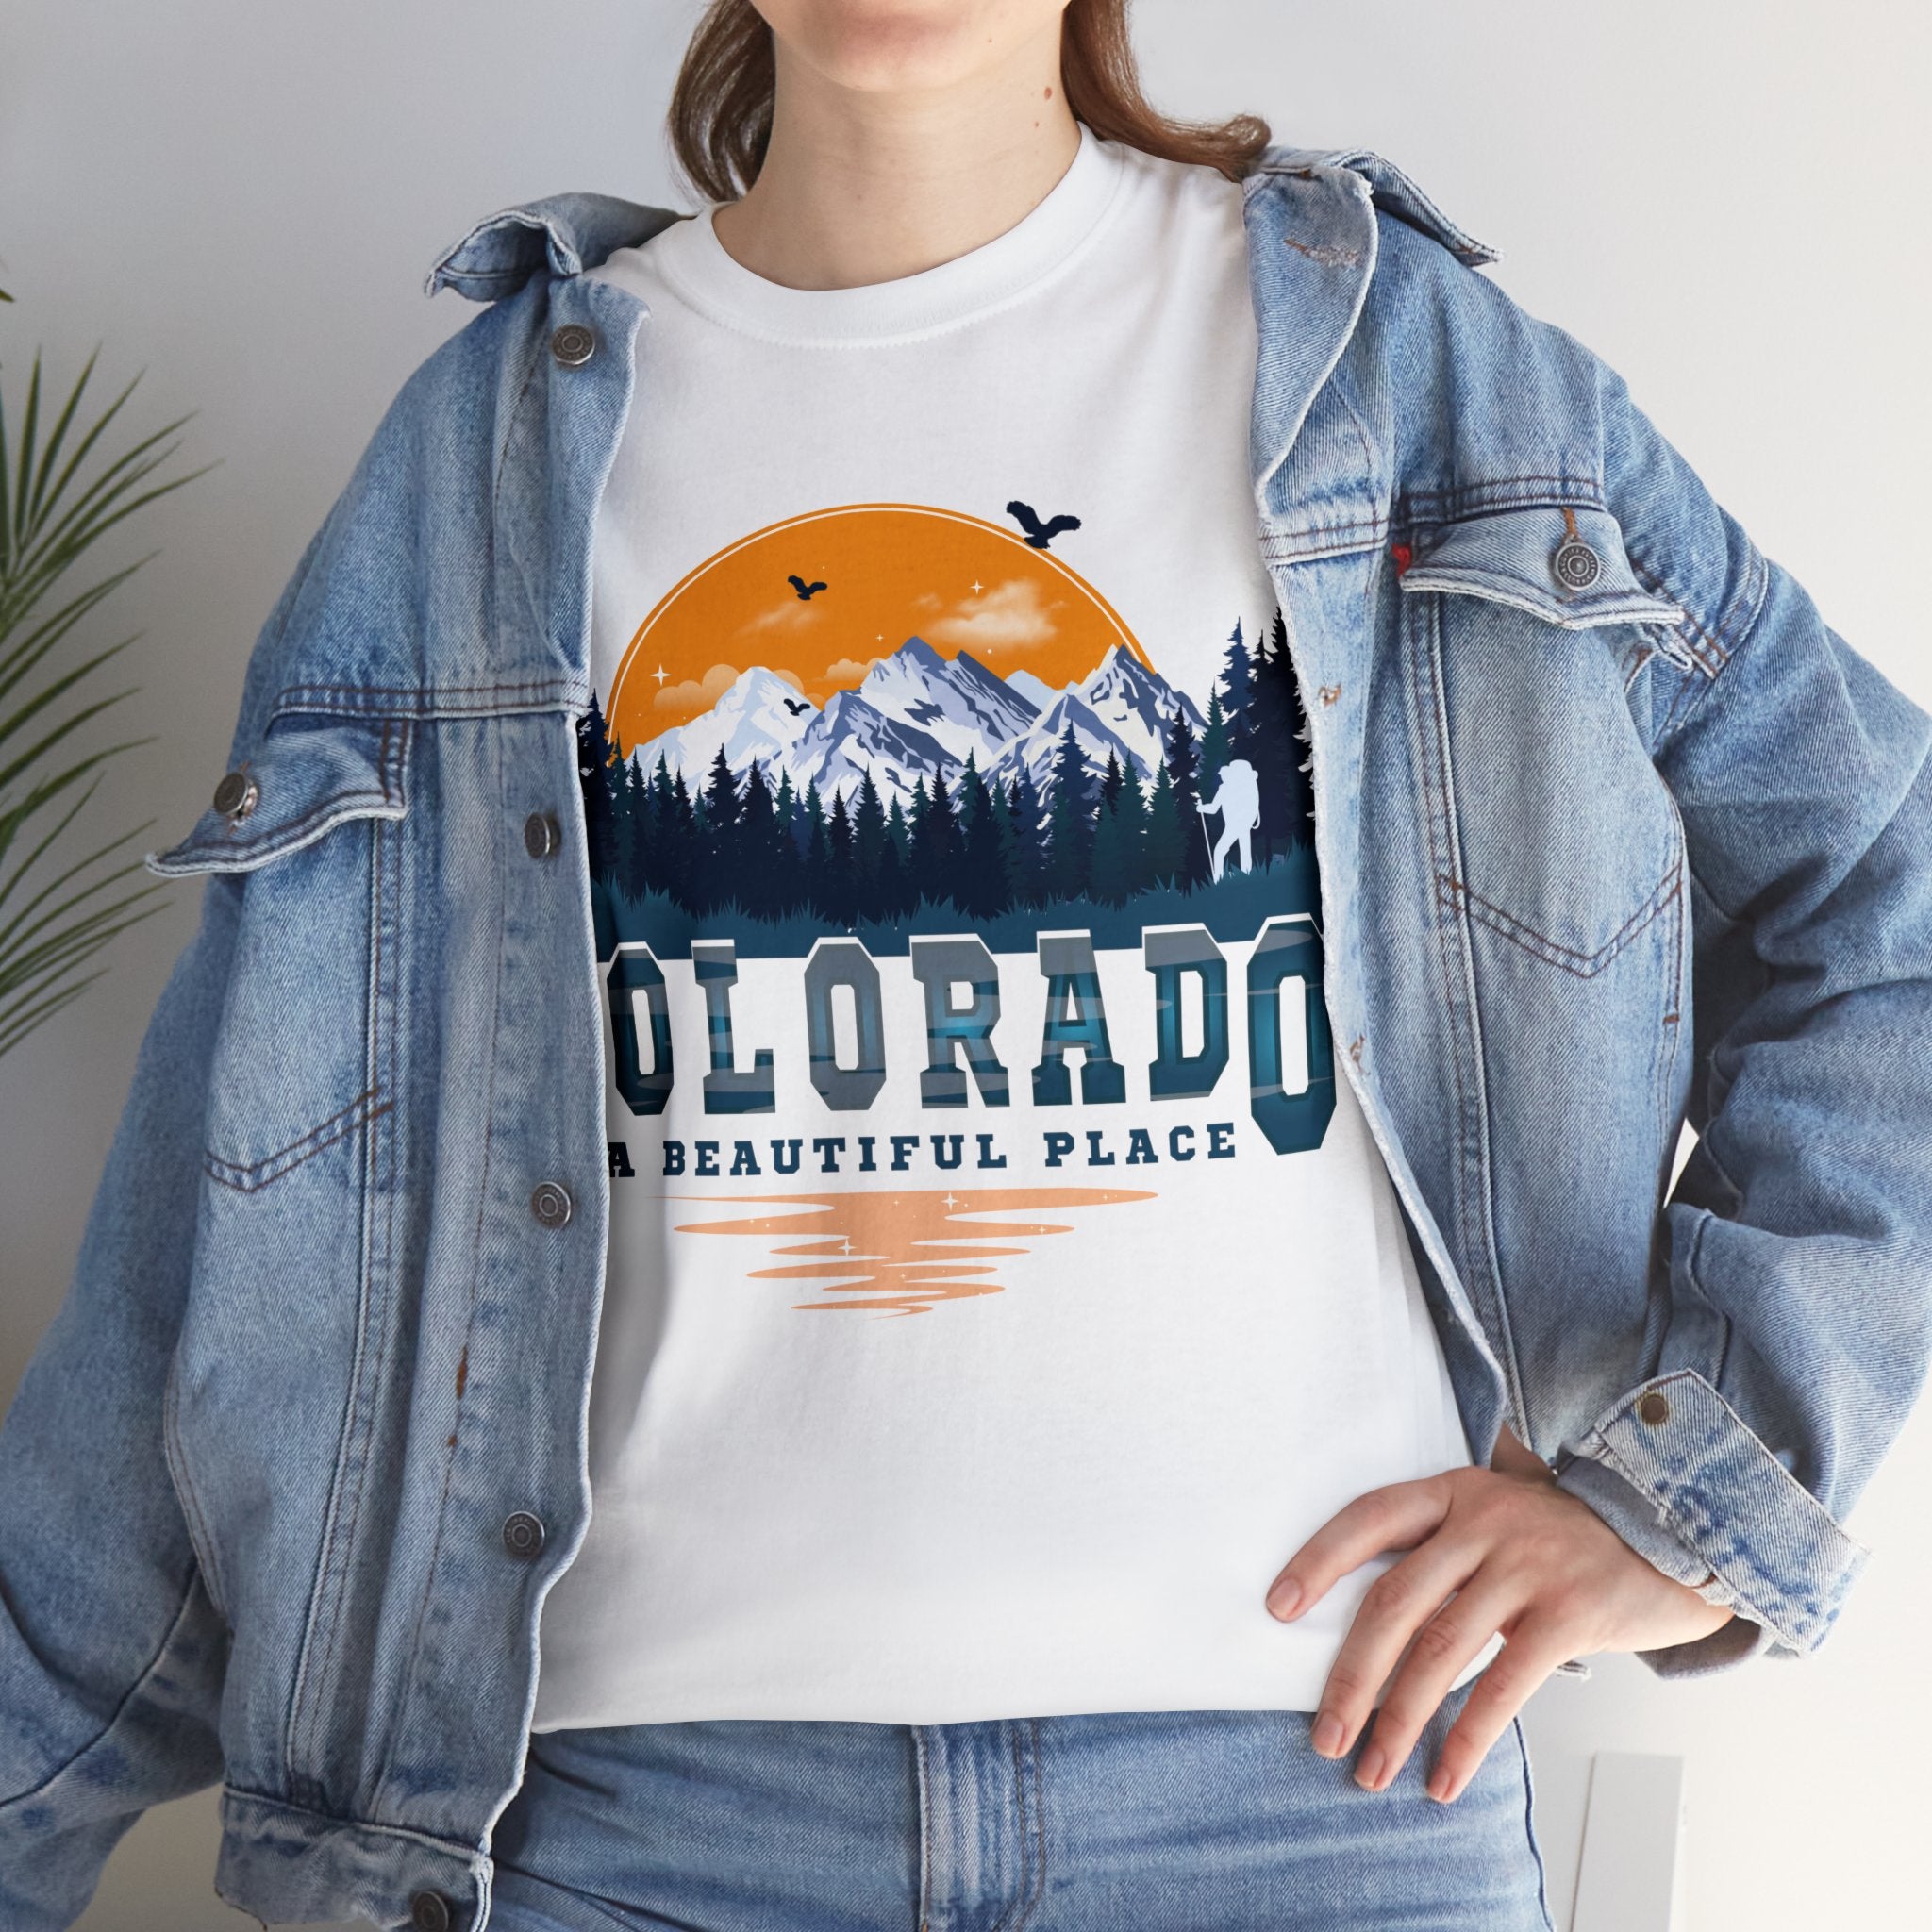 Colorado A Beautiful Place Retro Vintage Mountains Nature Hiking T-Shirt